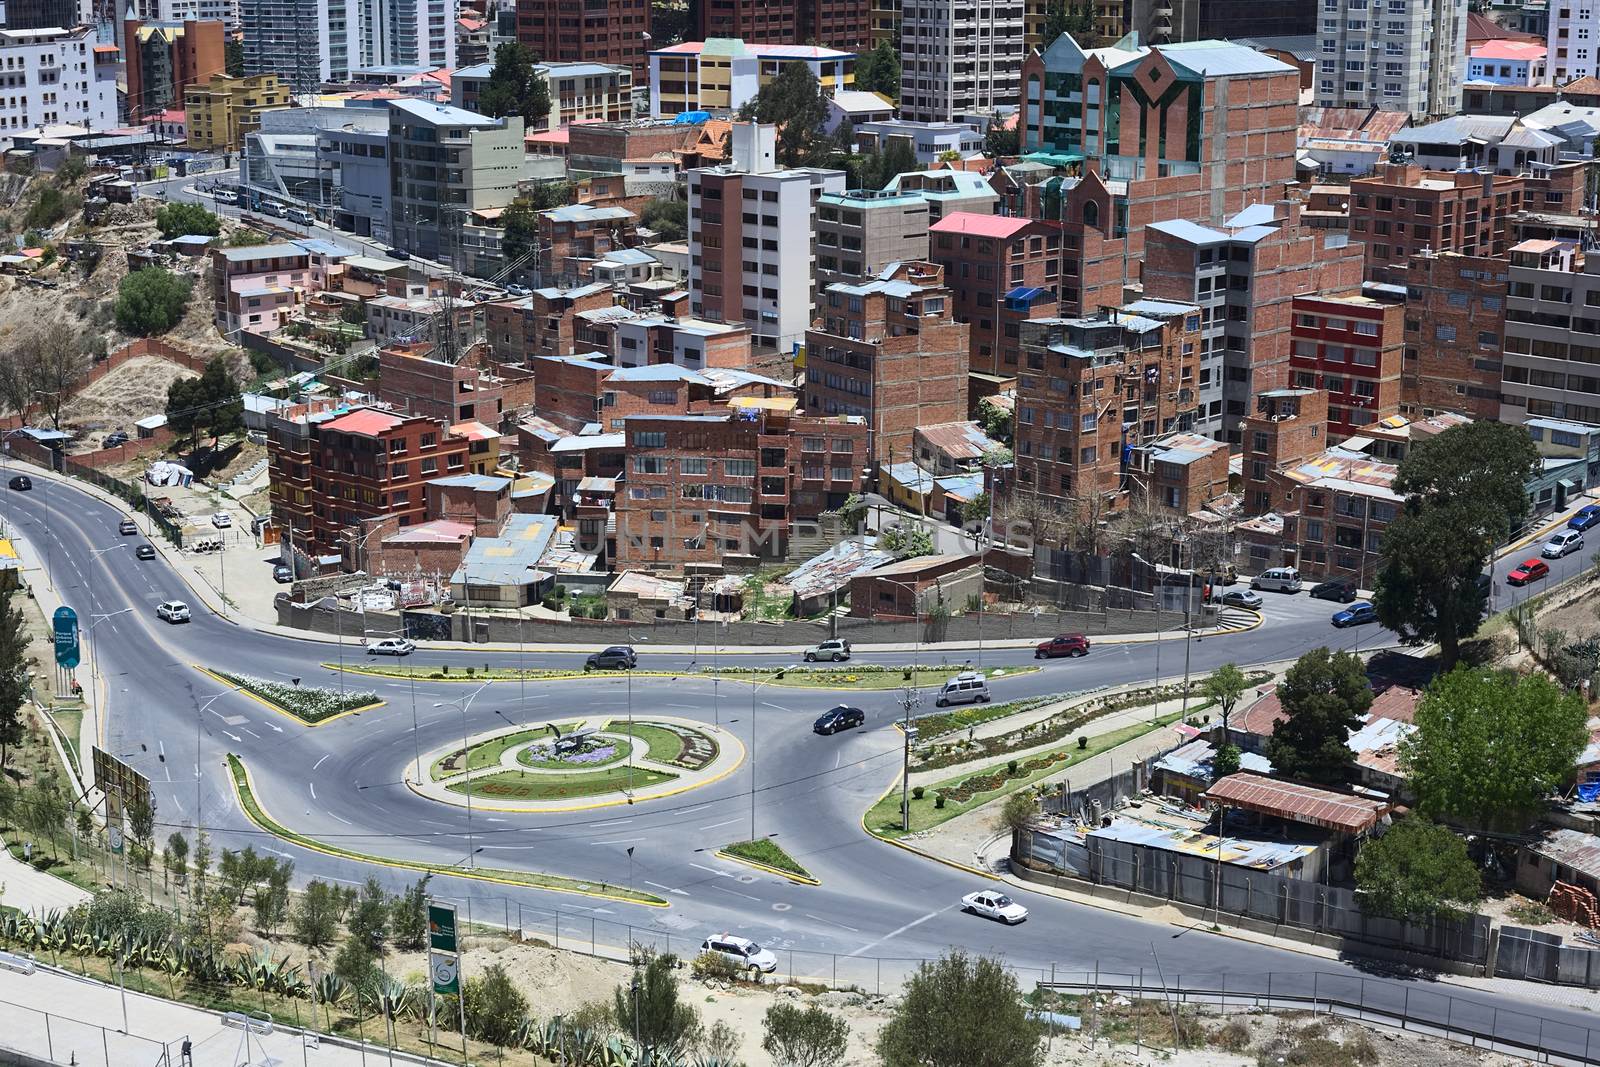 Roundabout in La Paz, Bolivia by sven